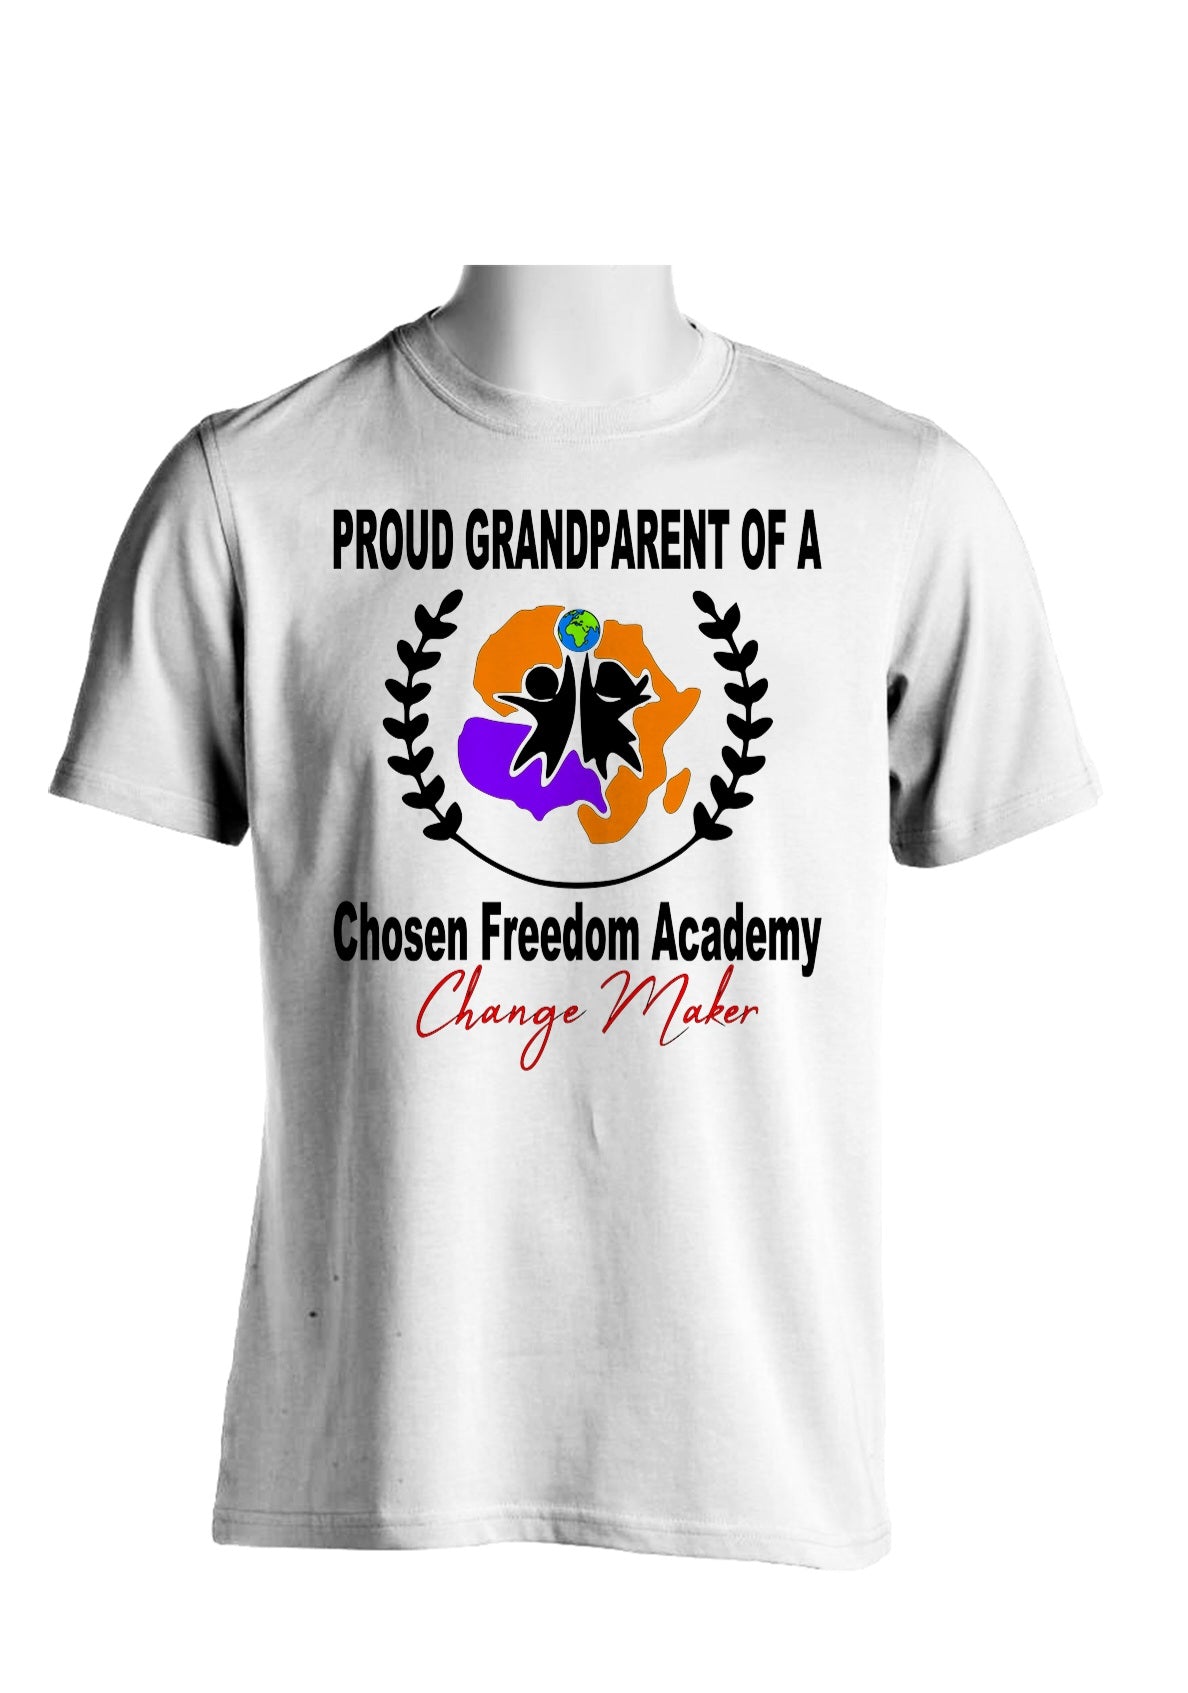 Proud Grandparent T-Shirt (Change Maker)